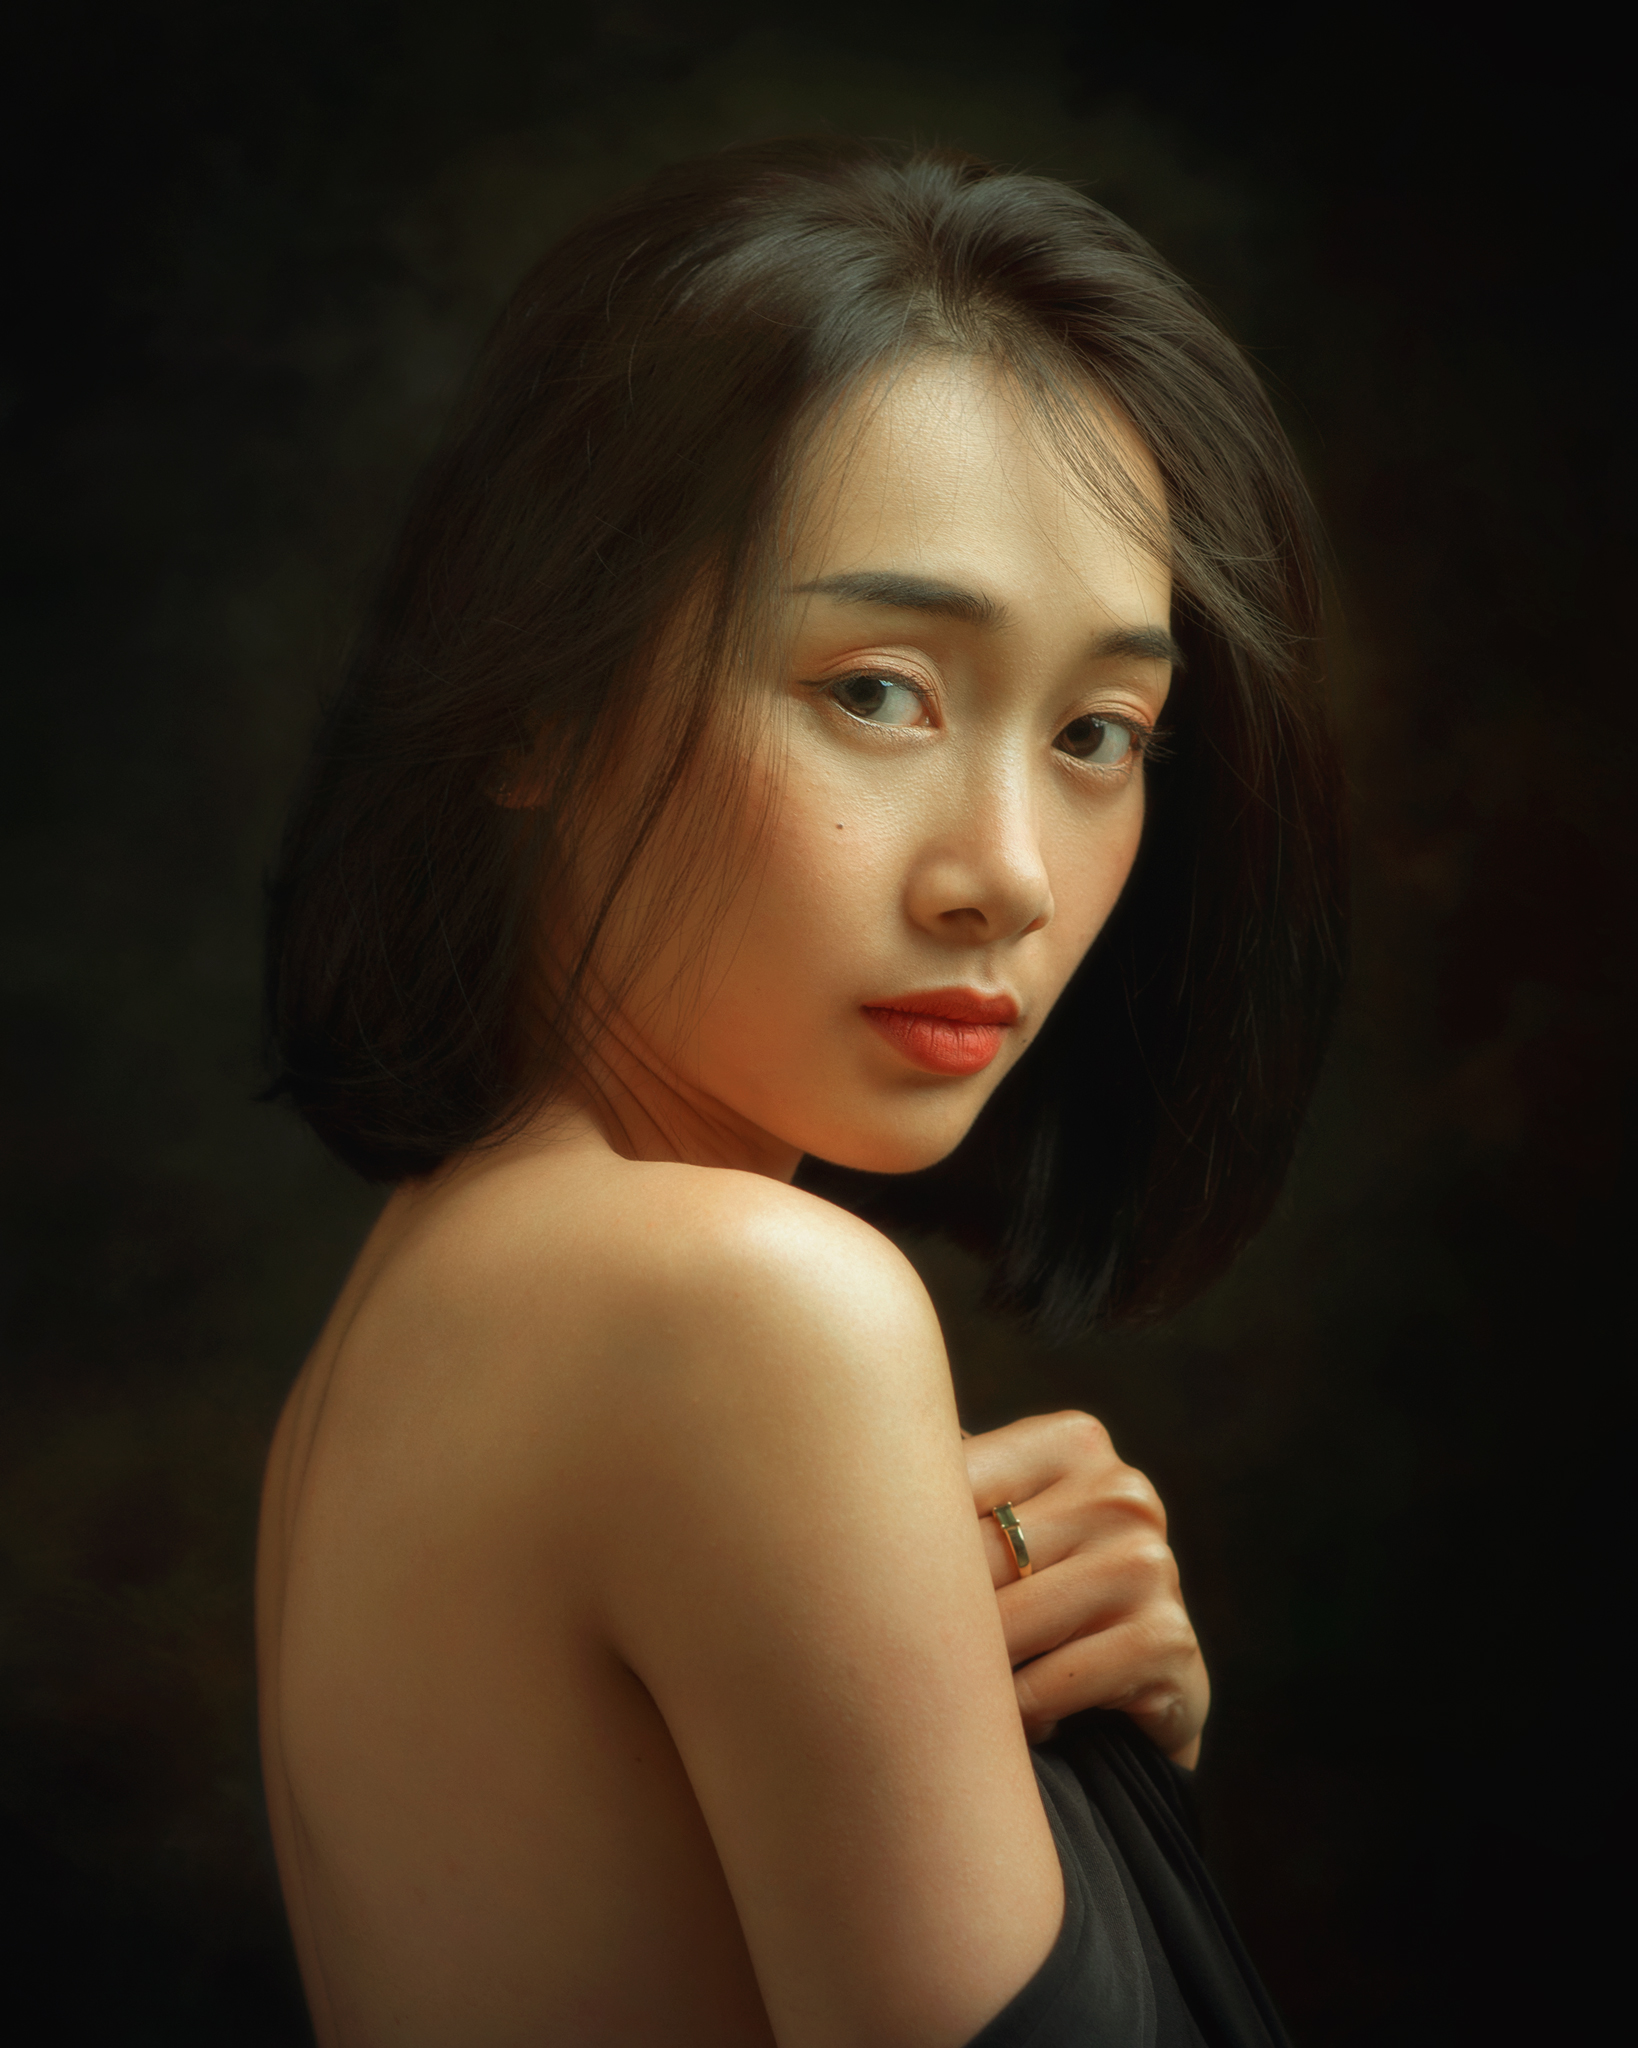 asian, vietnam, vietnamese, portrait, face, women, female, studio, eyes, Nguyen Hoang Viet